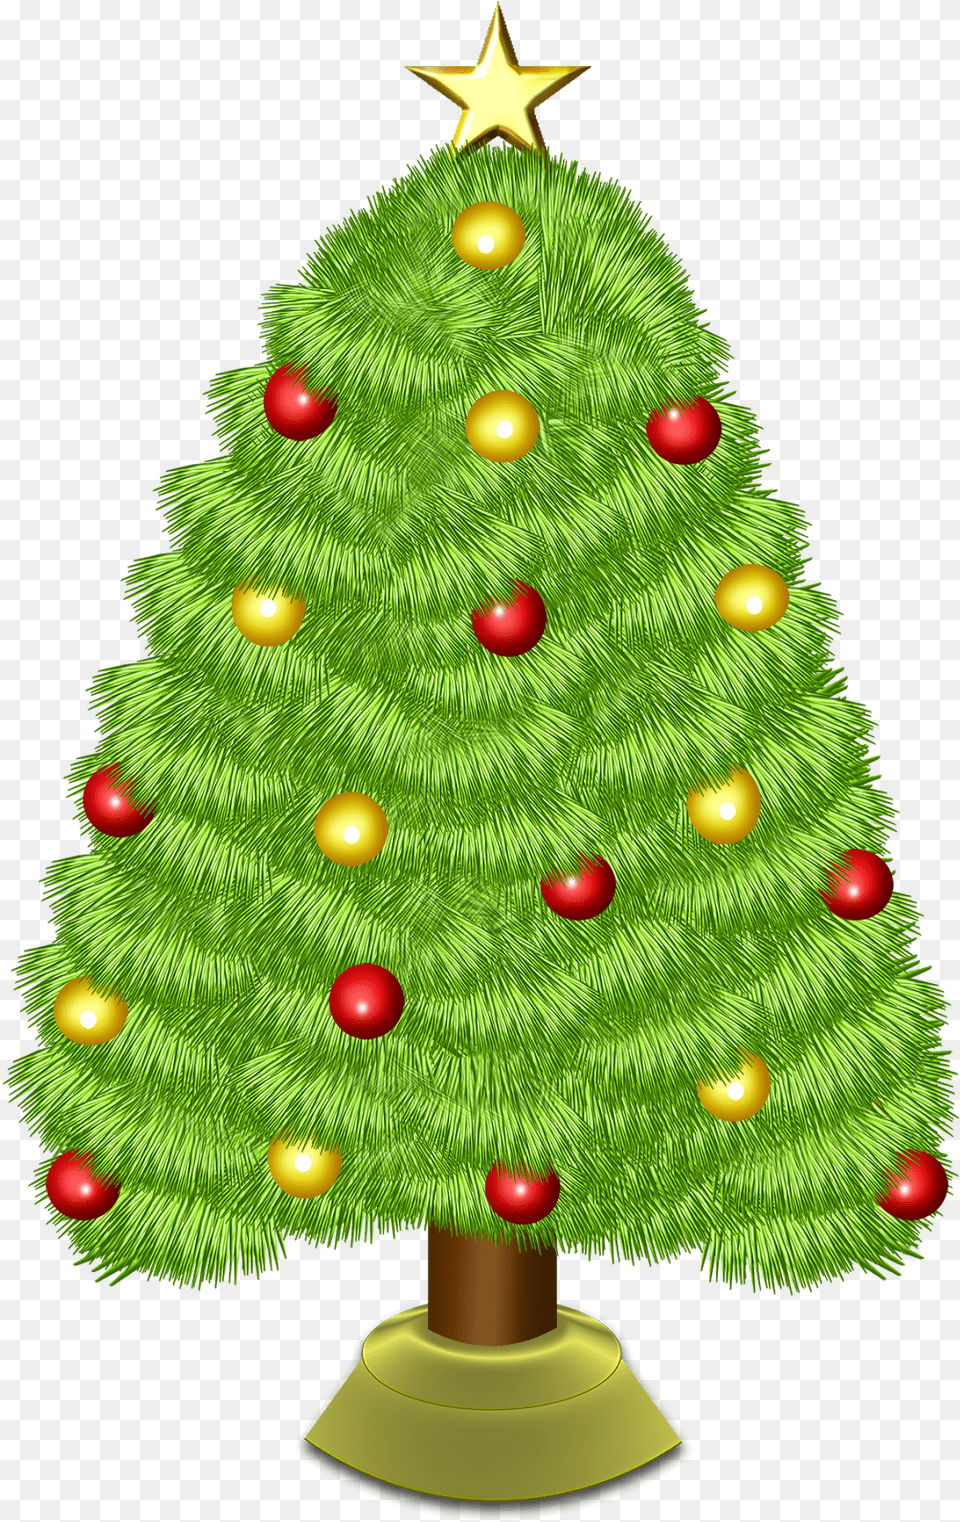 Rbol De Navidad, Plant, Tree, Christmas, Christmas Decorations Png Image